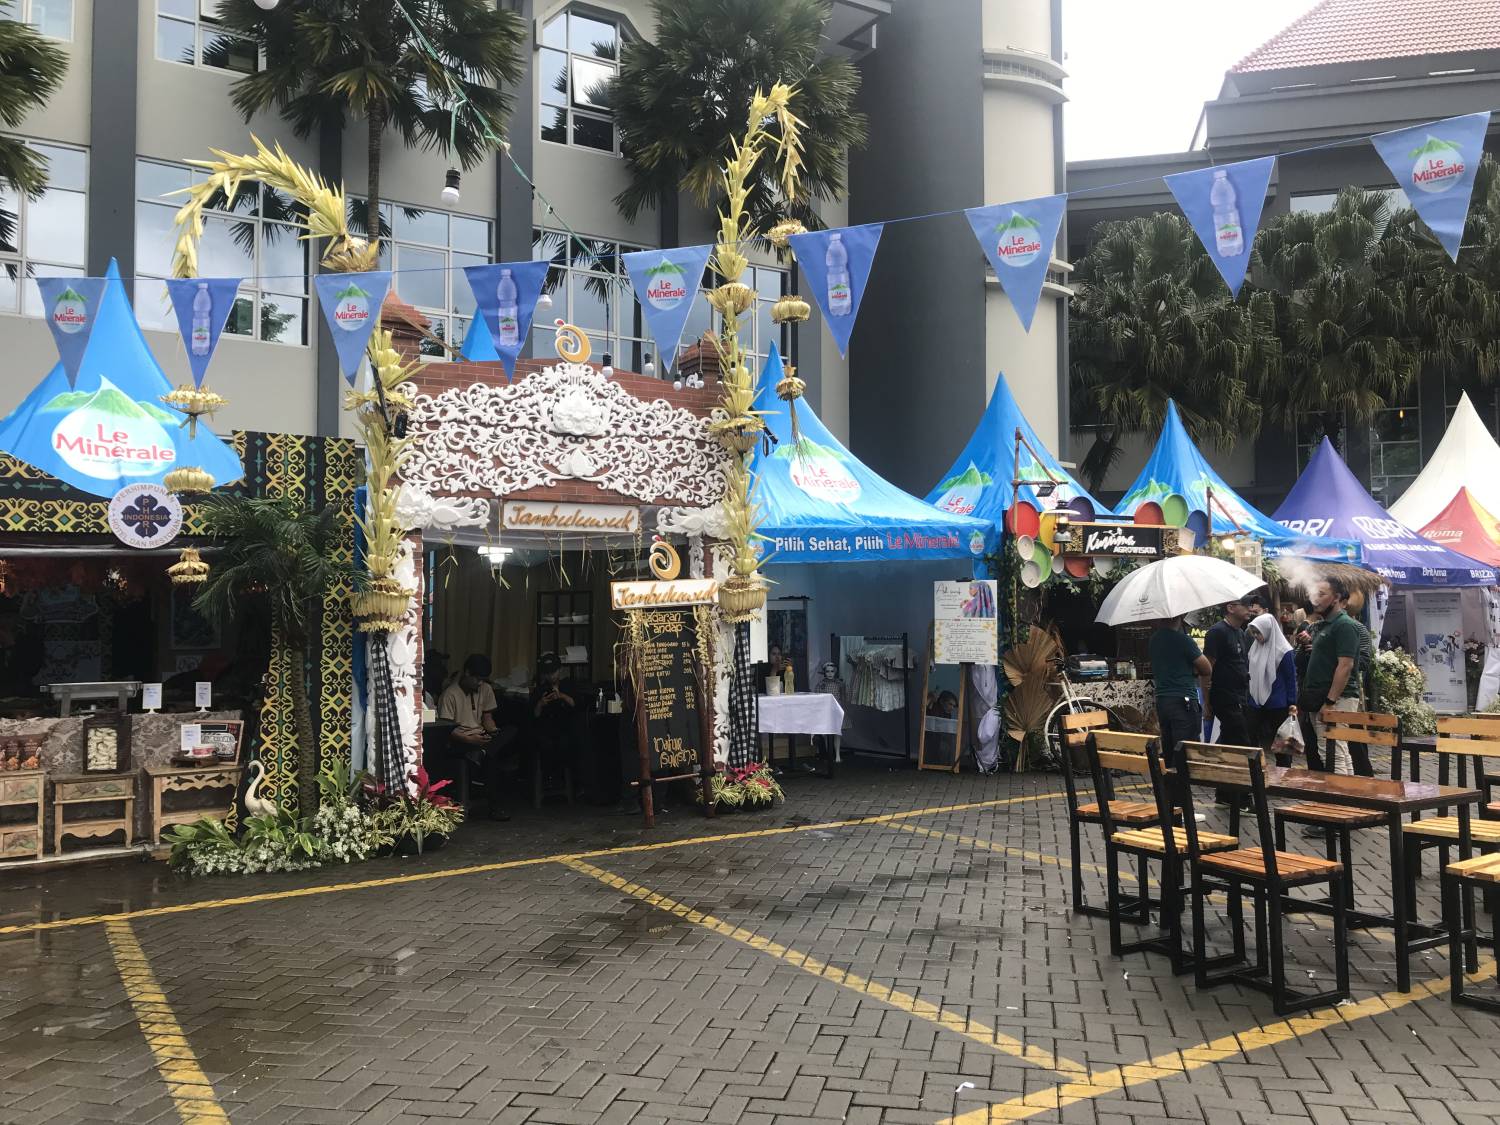 Batu Street Food Festival 2022